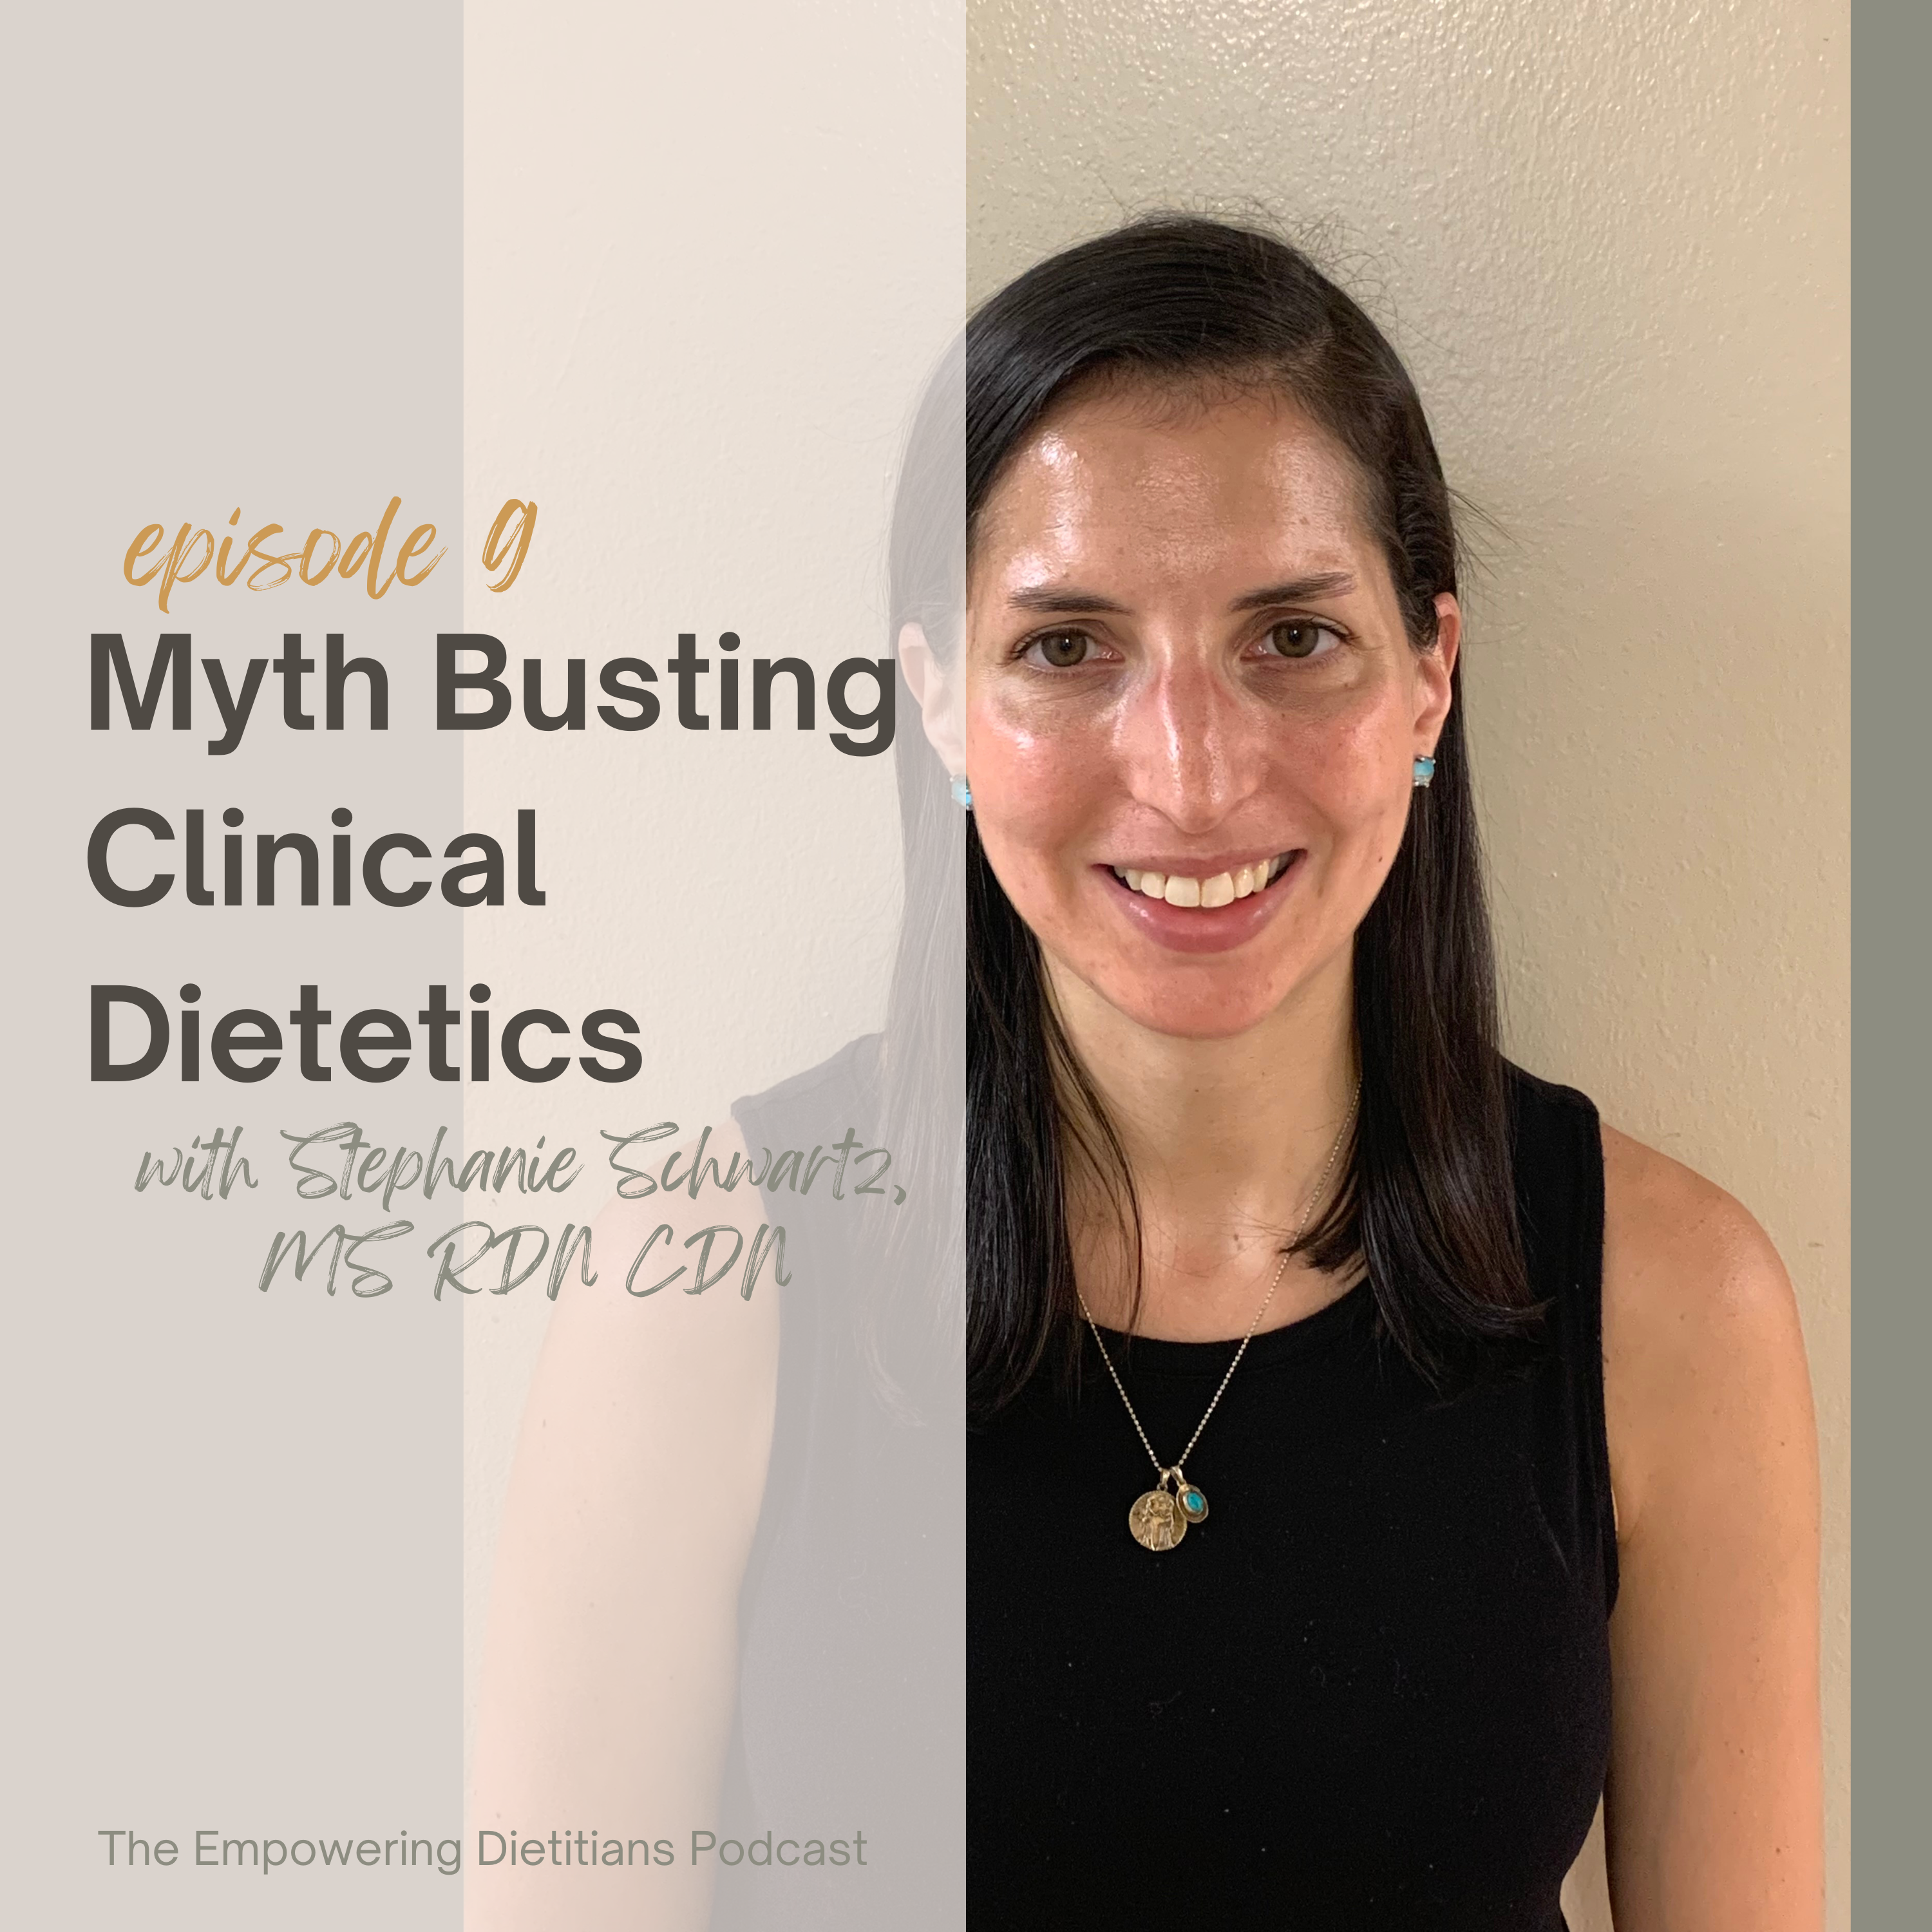 myth busting clinical dietetics with stephanie schwartz